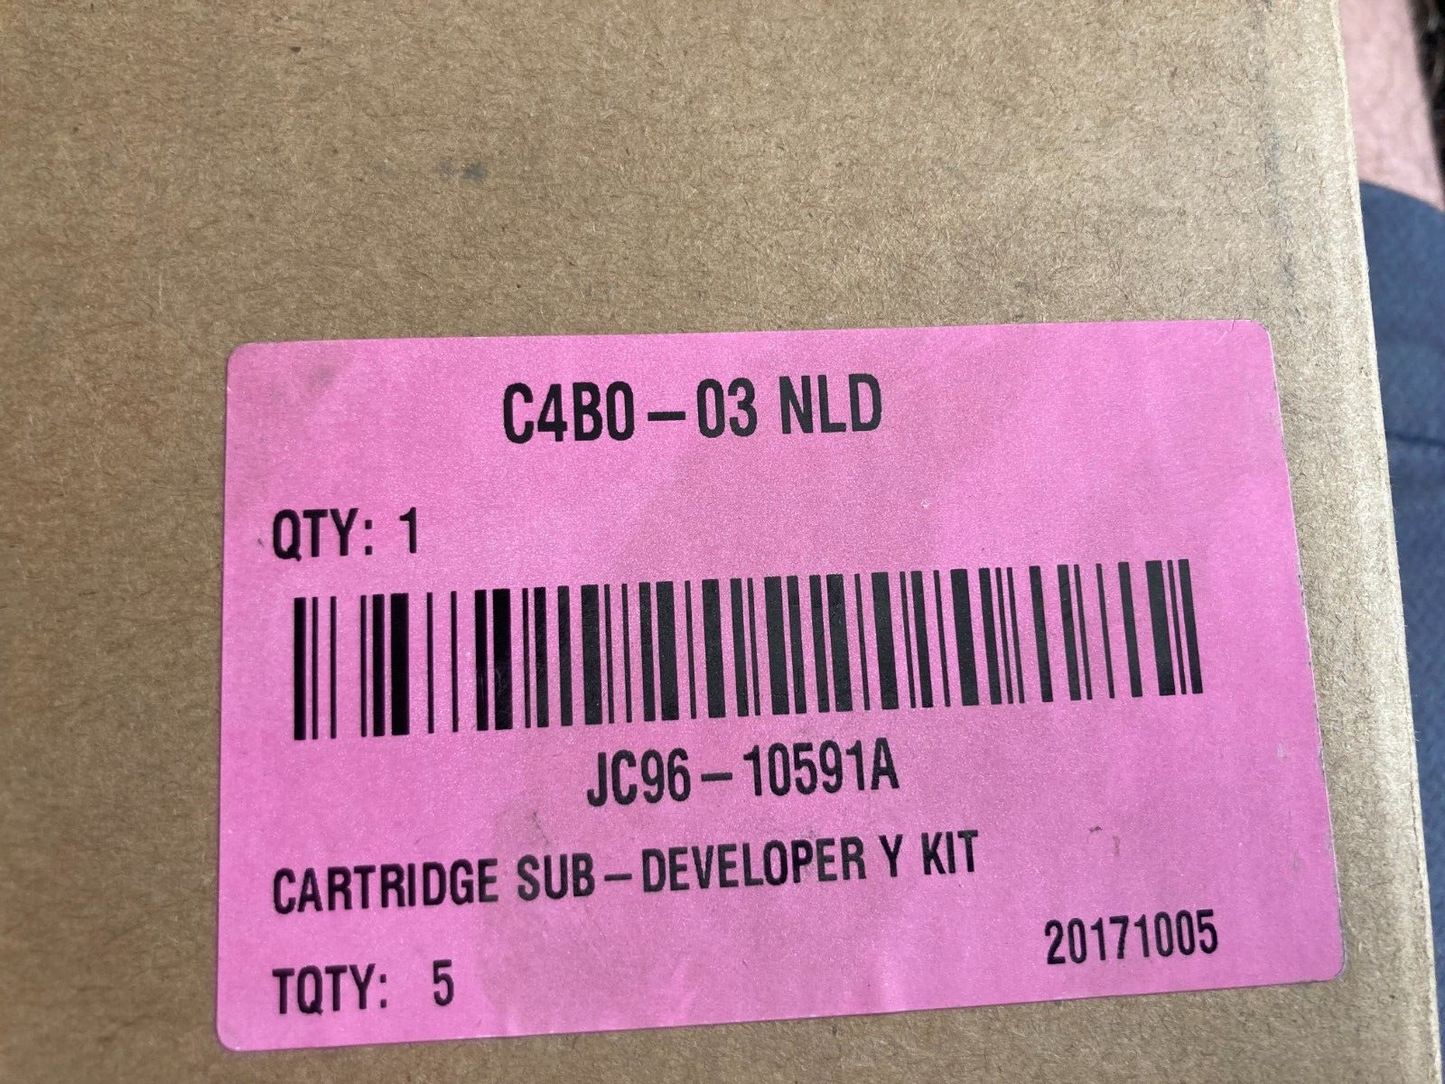 NEW HP SAMSUNG JC96-10591A CARTRIDGE SUB DEVELOPER Y KIT